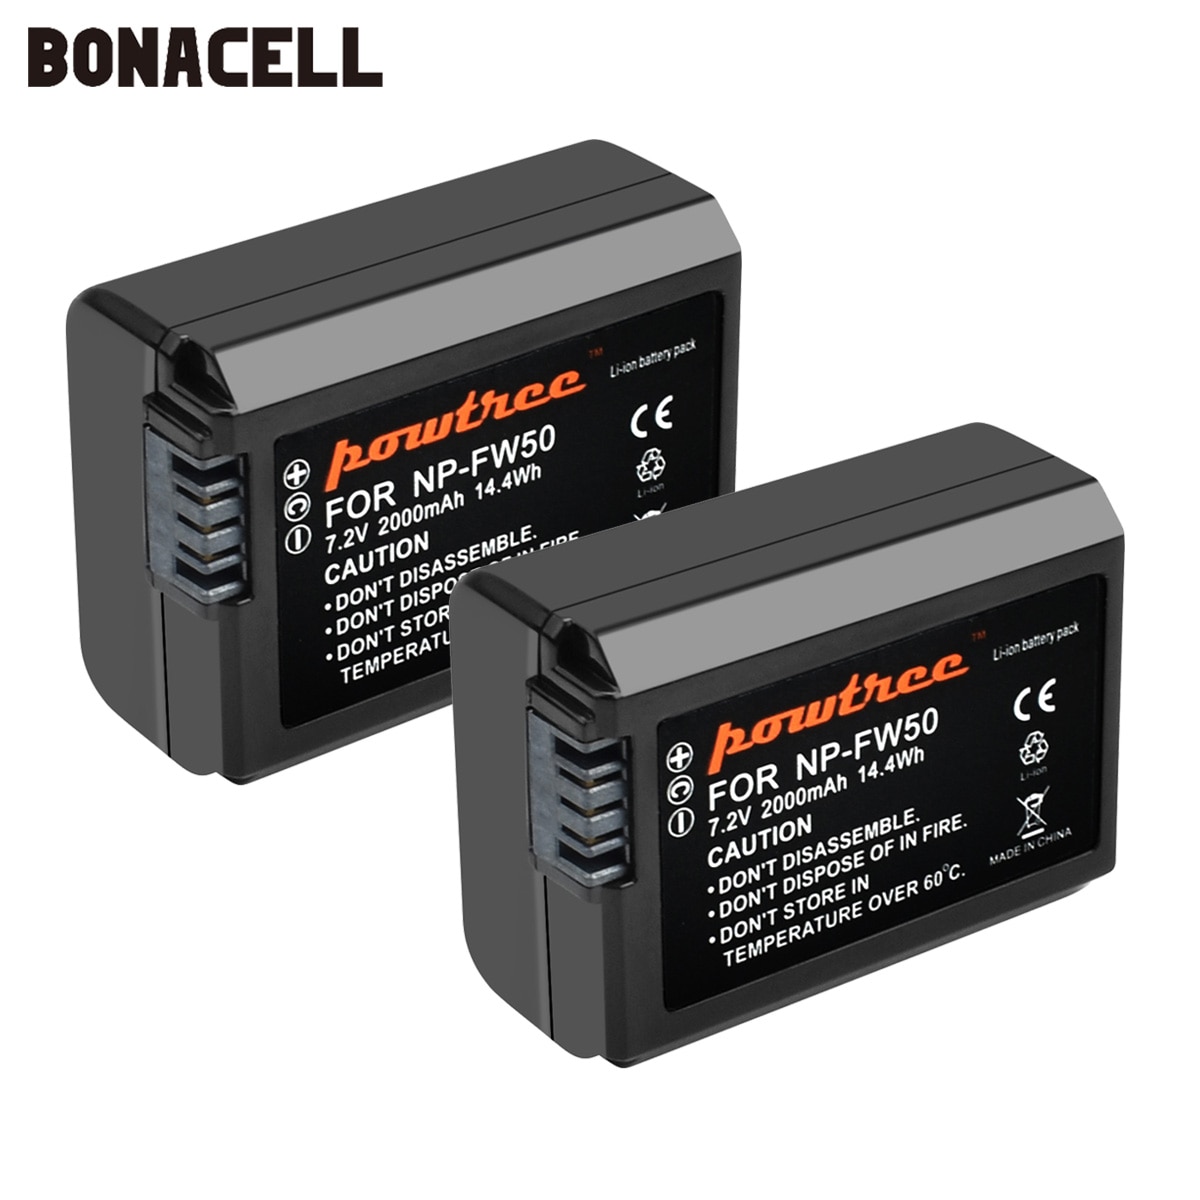 Bonacell 2000mah NP-FW50 NP FW50 batería AKKU para Sony NEX-7 NEX-5N NEX-5R NEX-F3 NEX-3D alfa a5000 a6000 DSC-RX10 Alpha 7 a7II